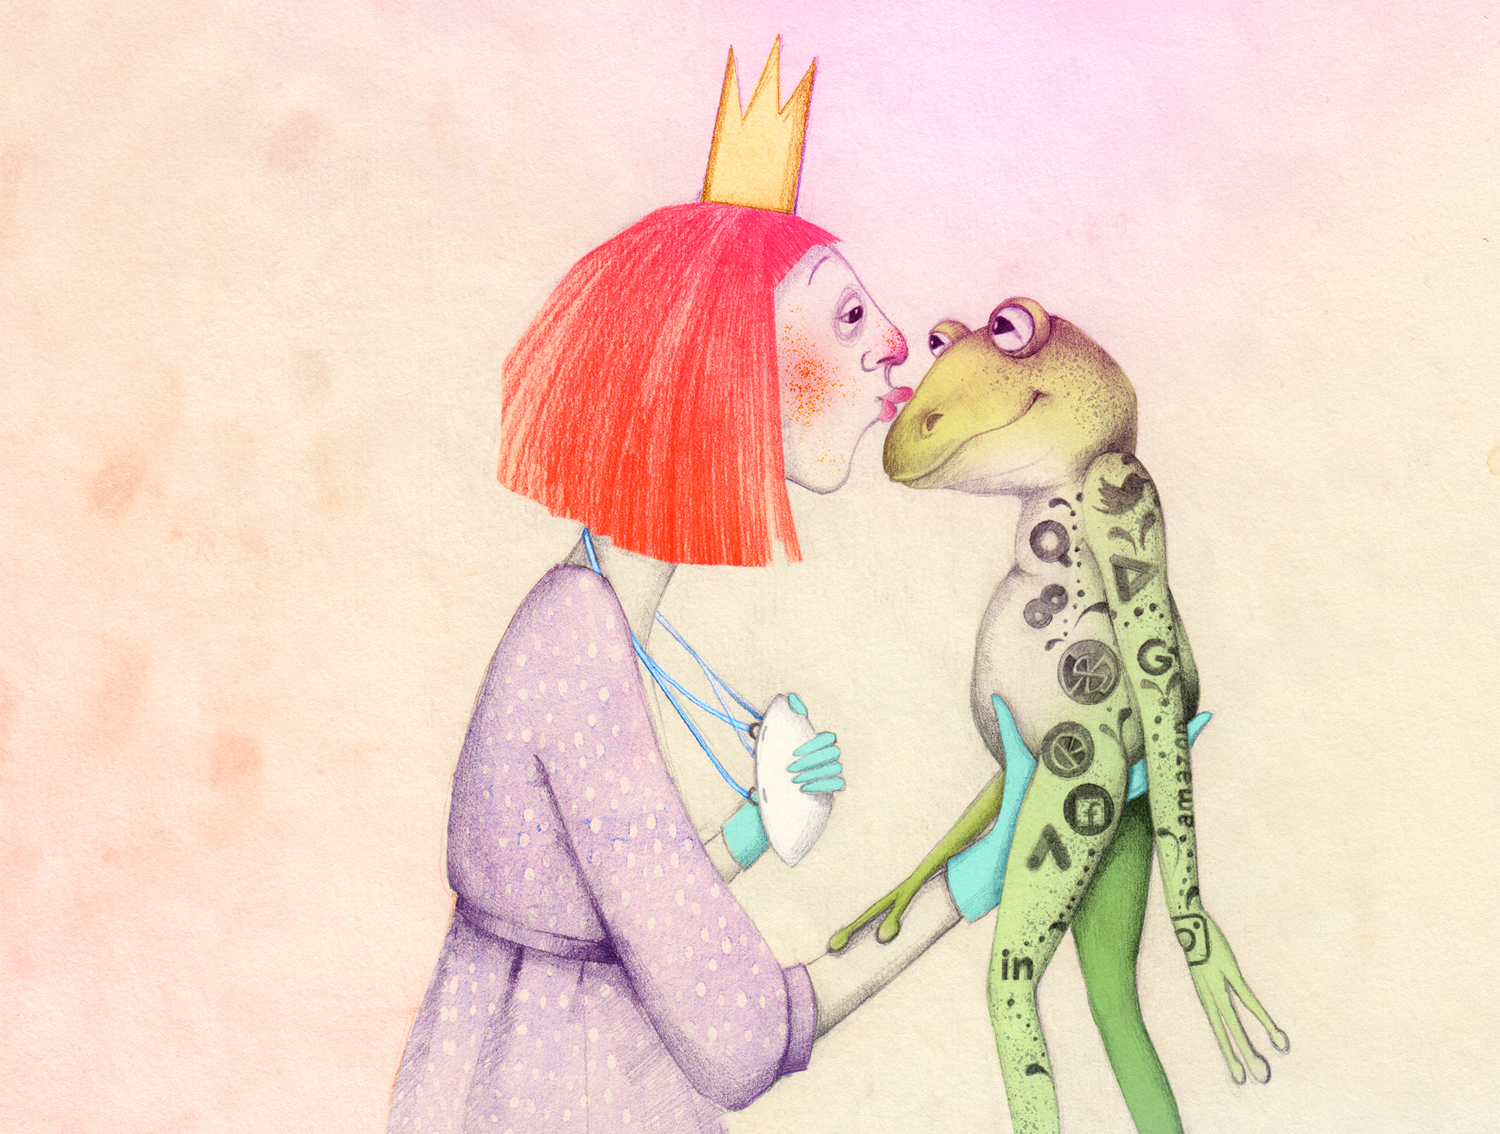 kiss the frog